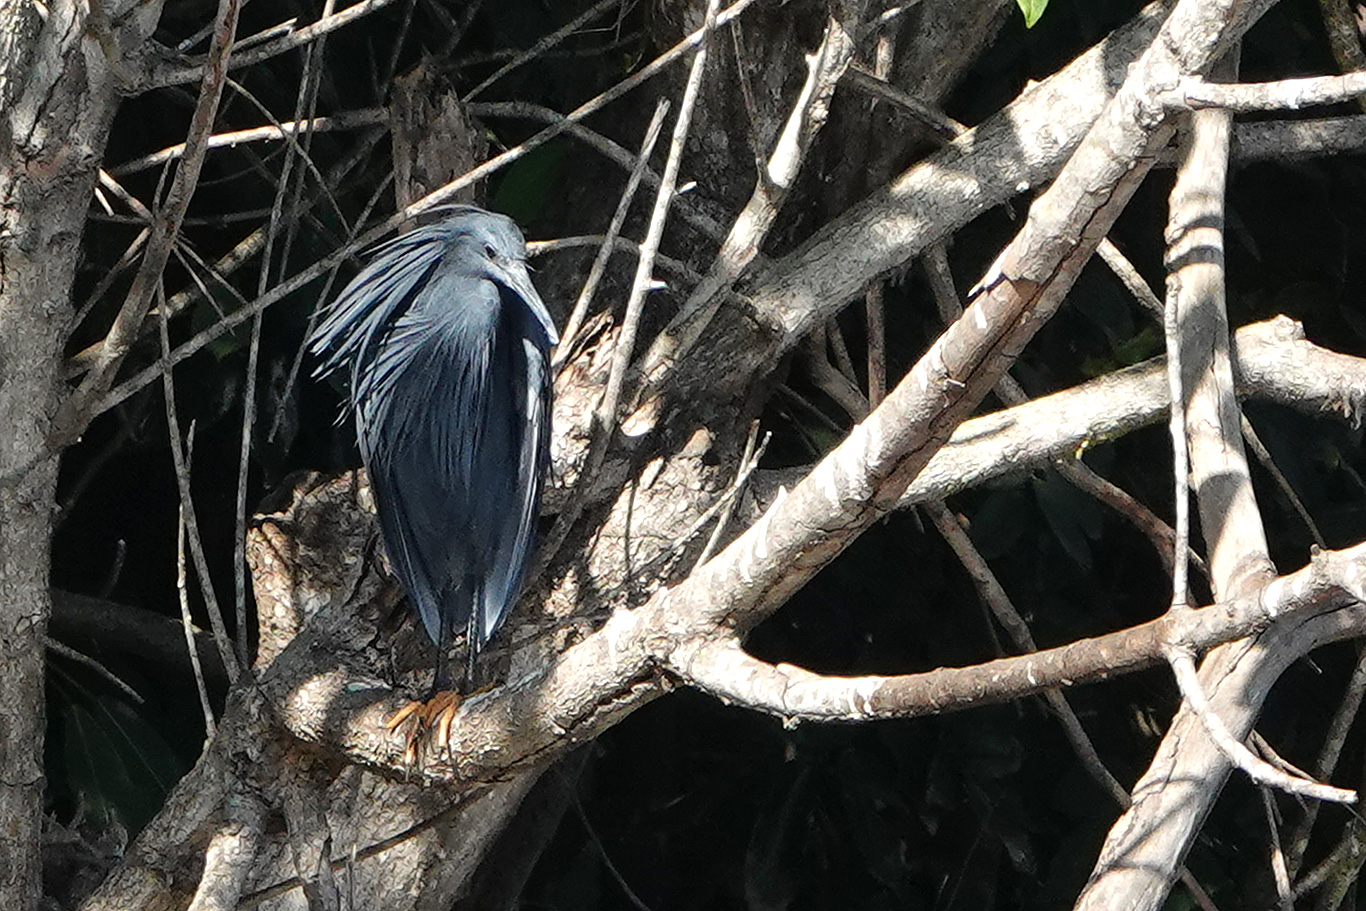 Black Heron, Marikissa, The Gambia.